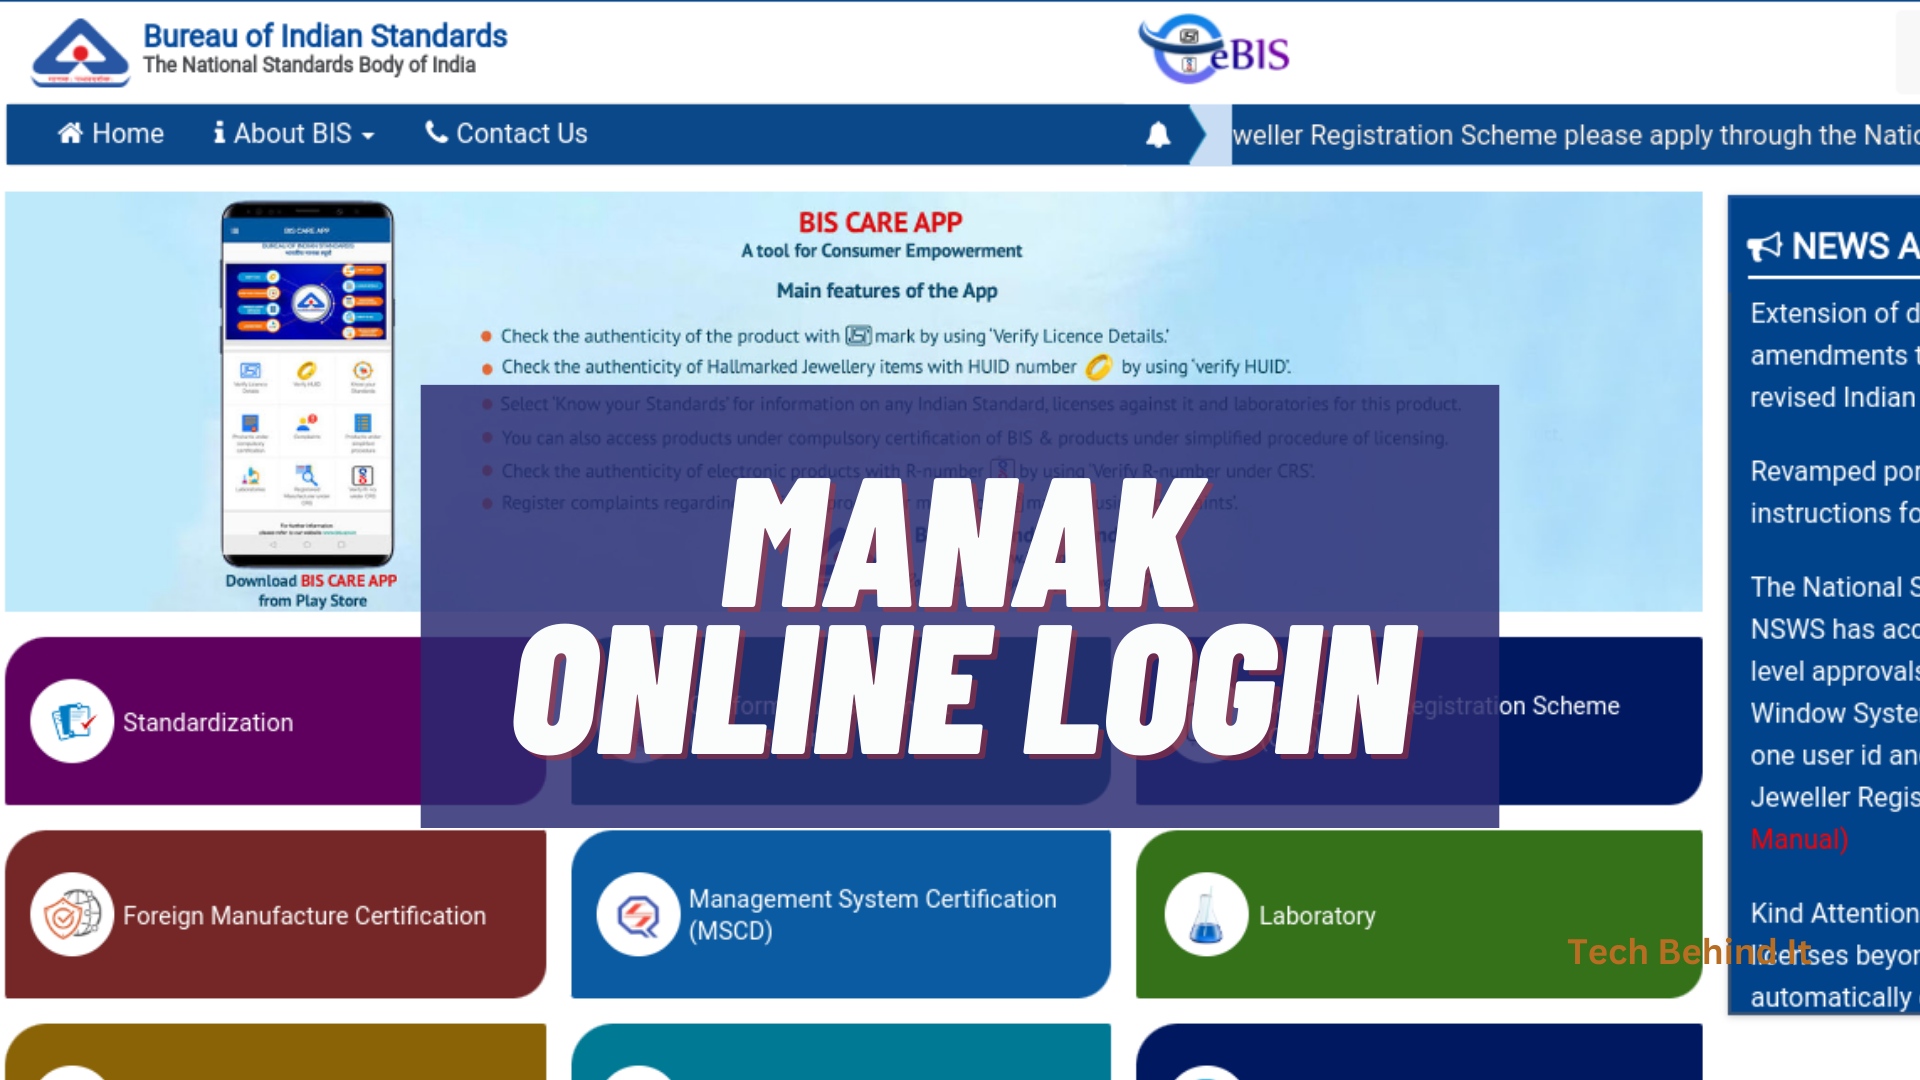 ManakOnline login: Registration and renewal of consumer goods 